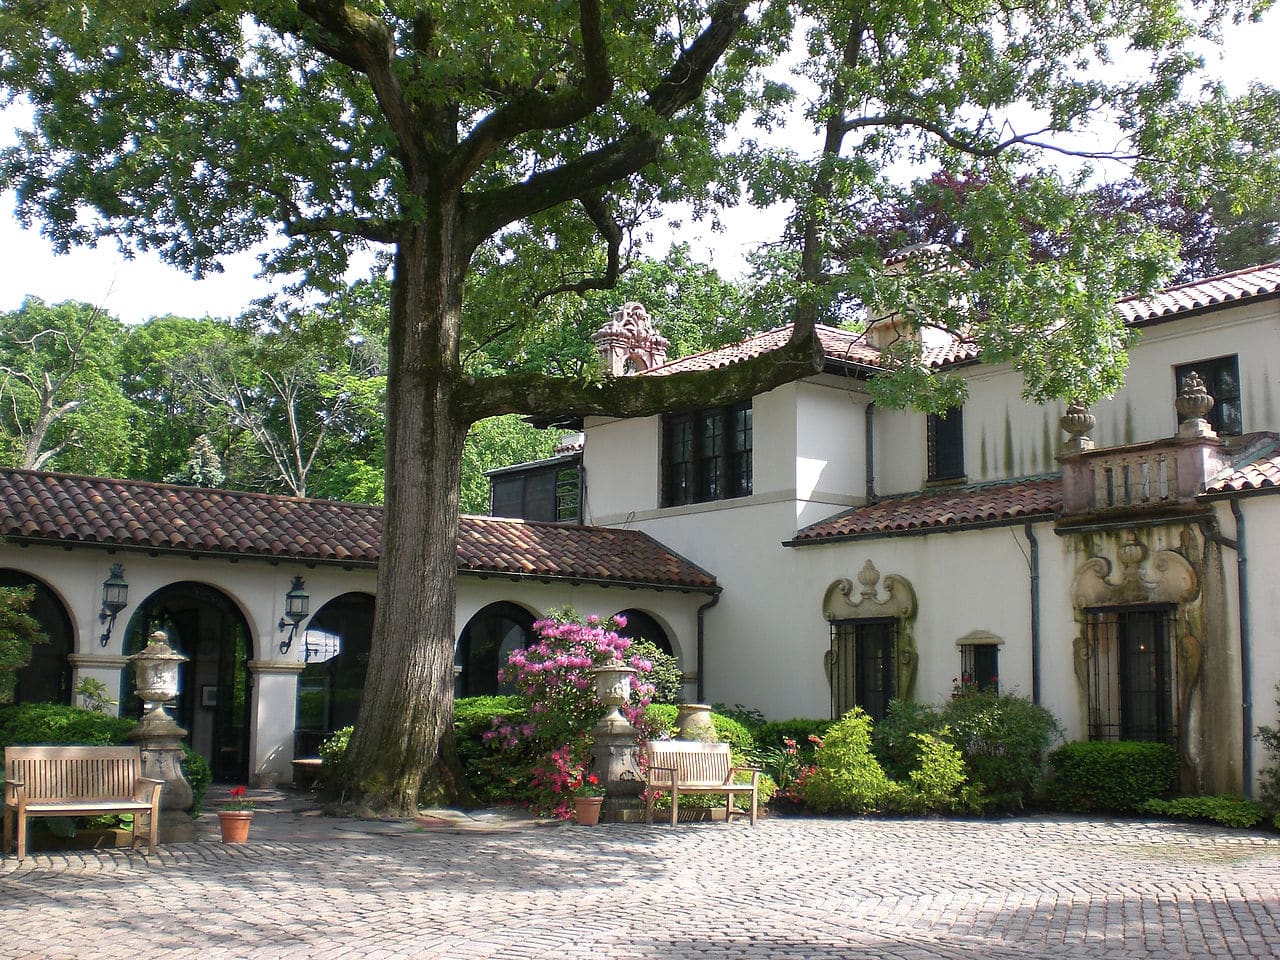 The charm of new York: the estate of the Vanderbilt, long island